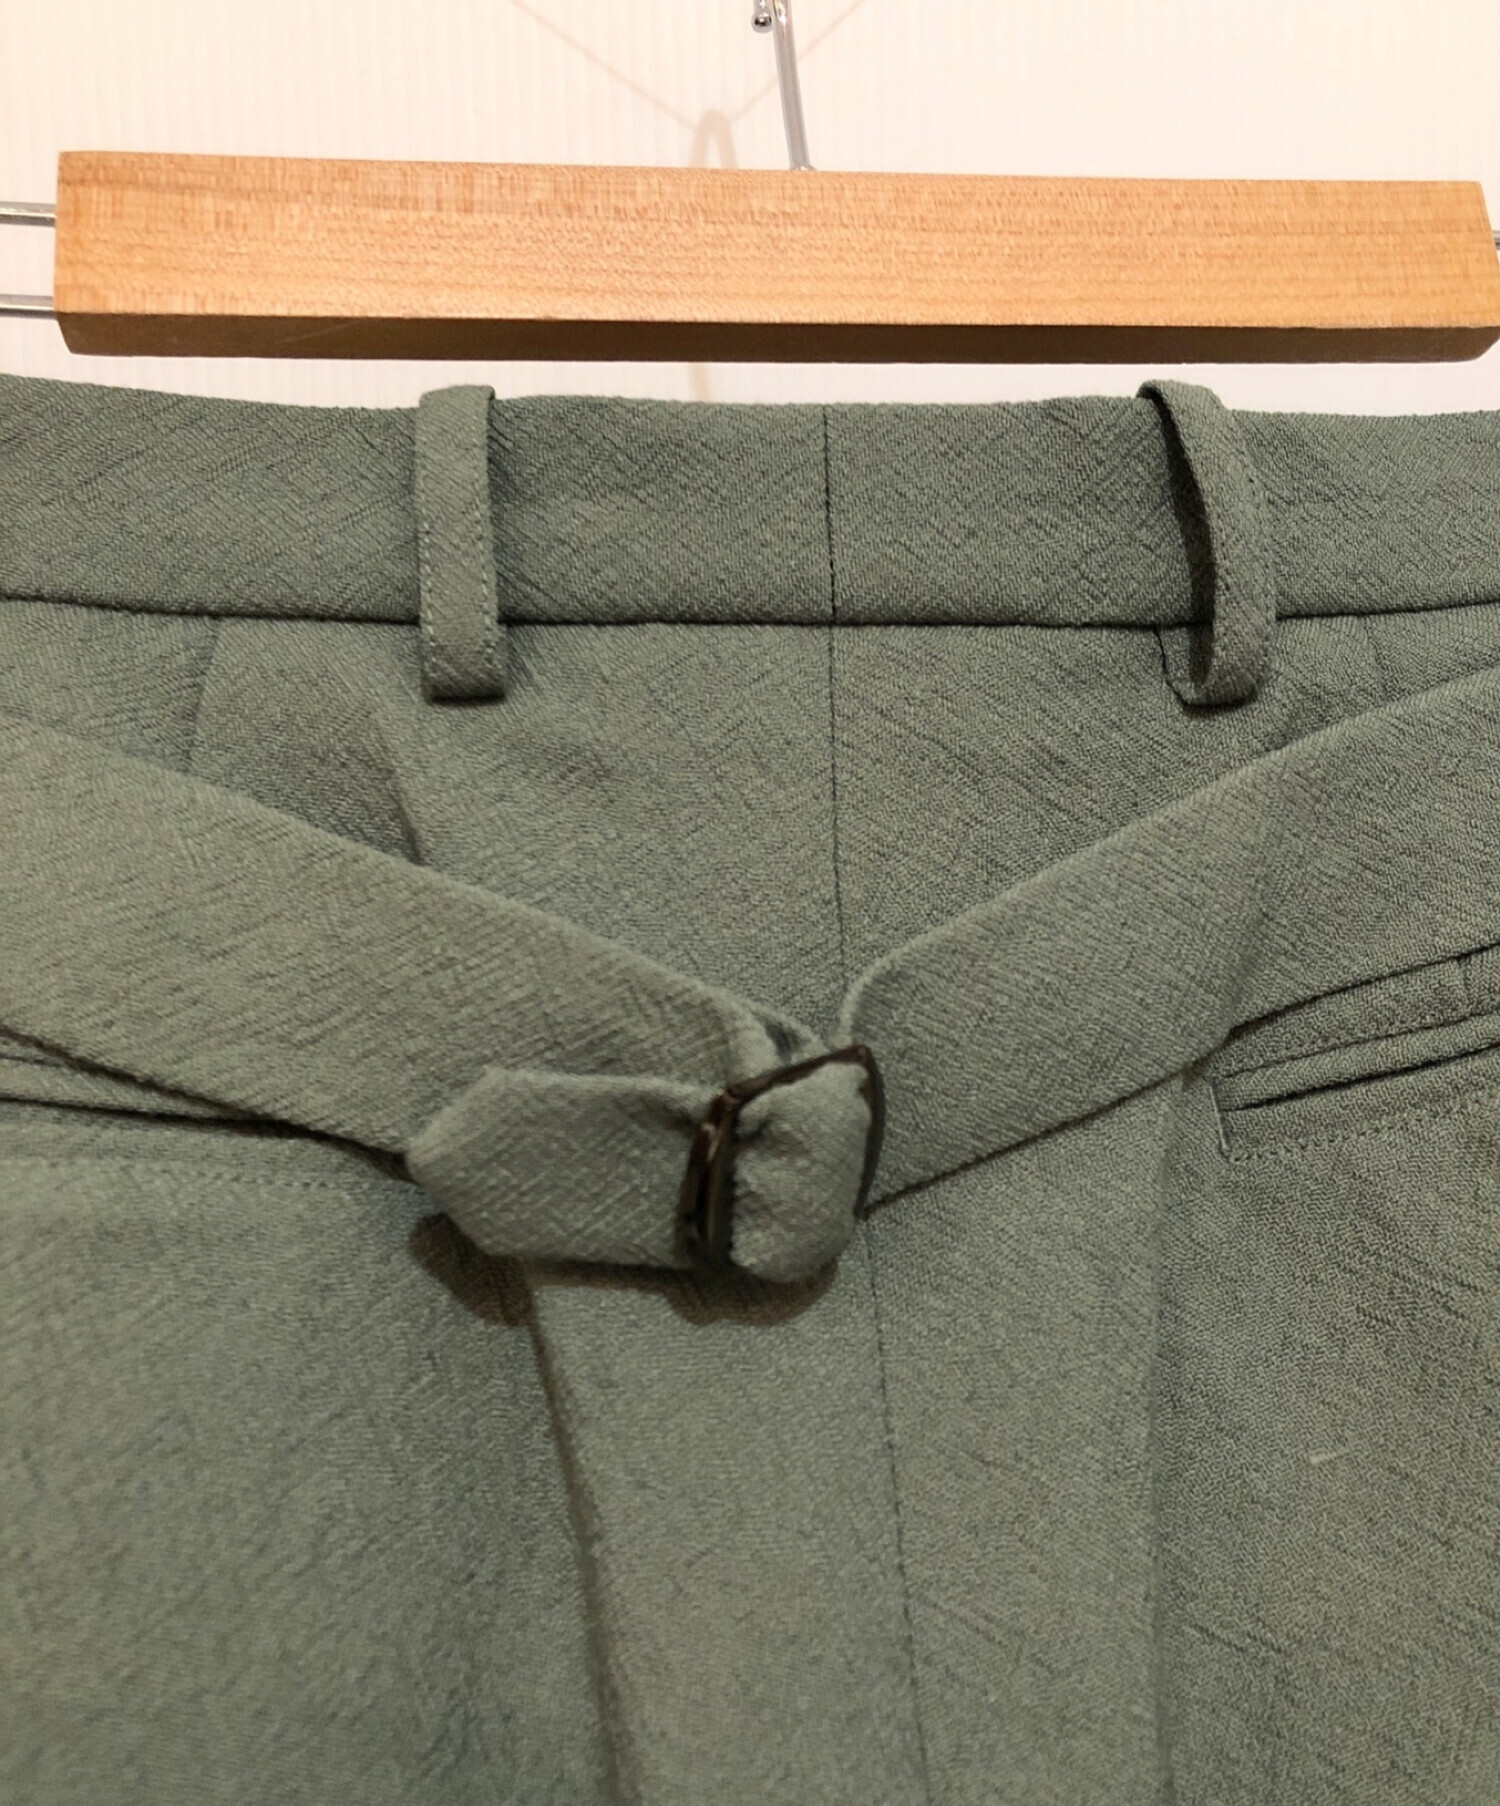 RAKINES (ラキネス) 21AW Rigid washer tropical R-pants パンツ グリーン サイズ:3 未使用品